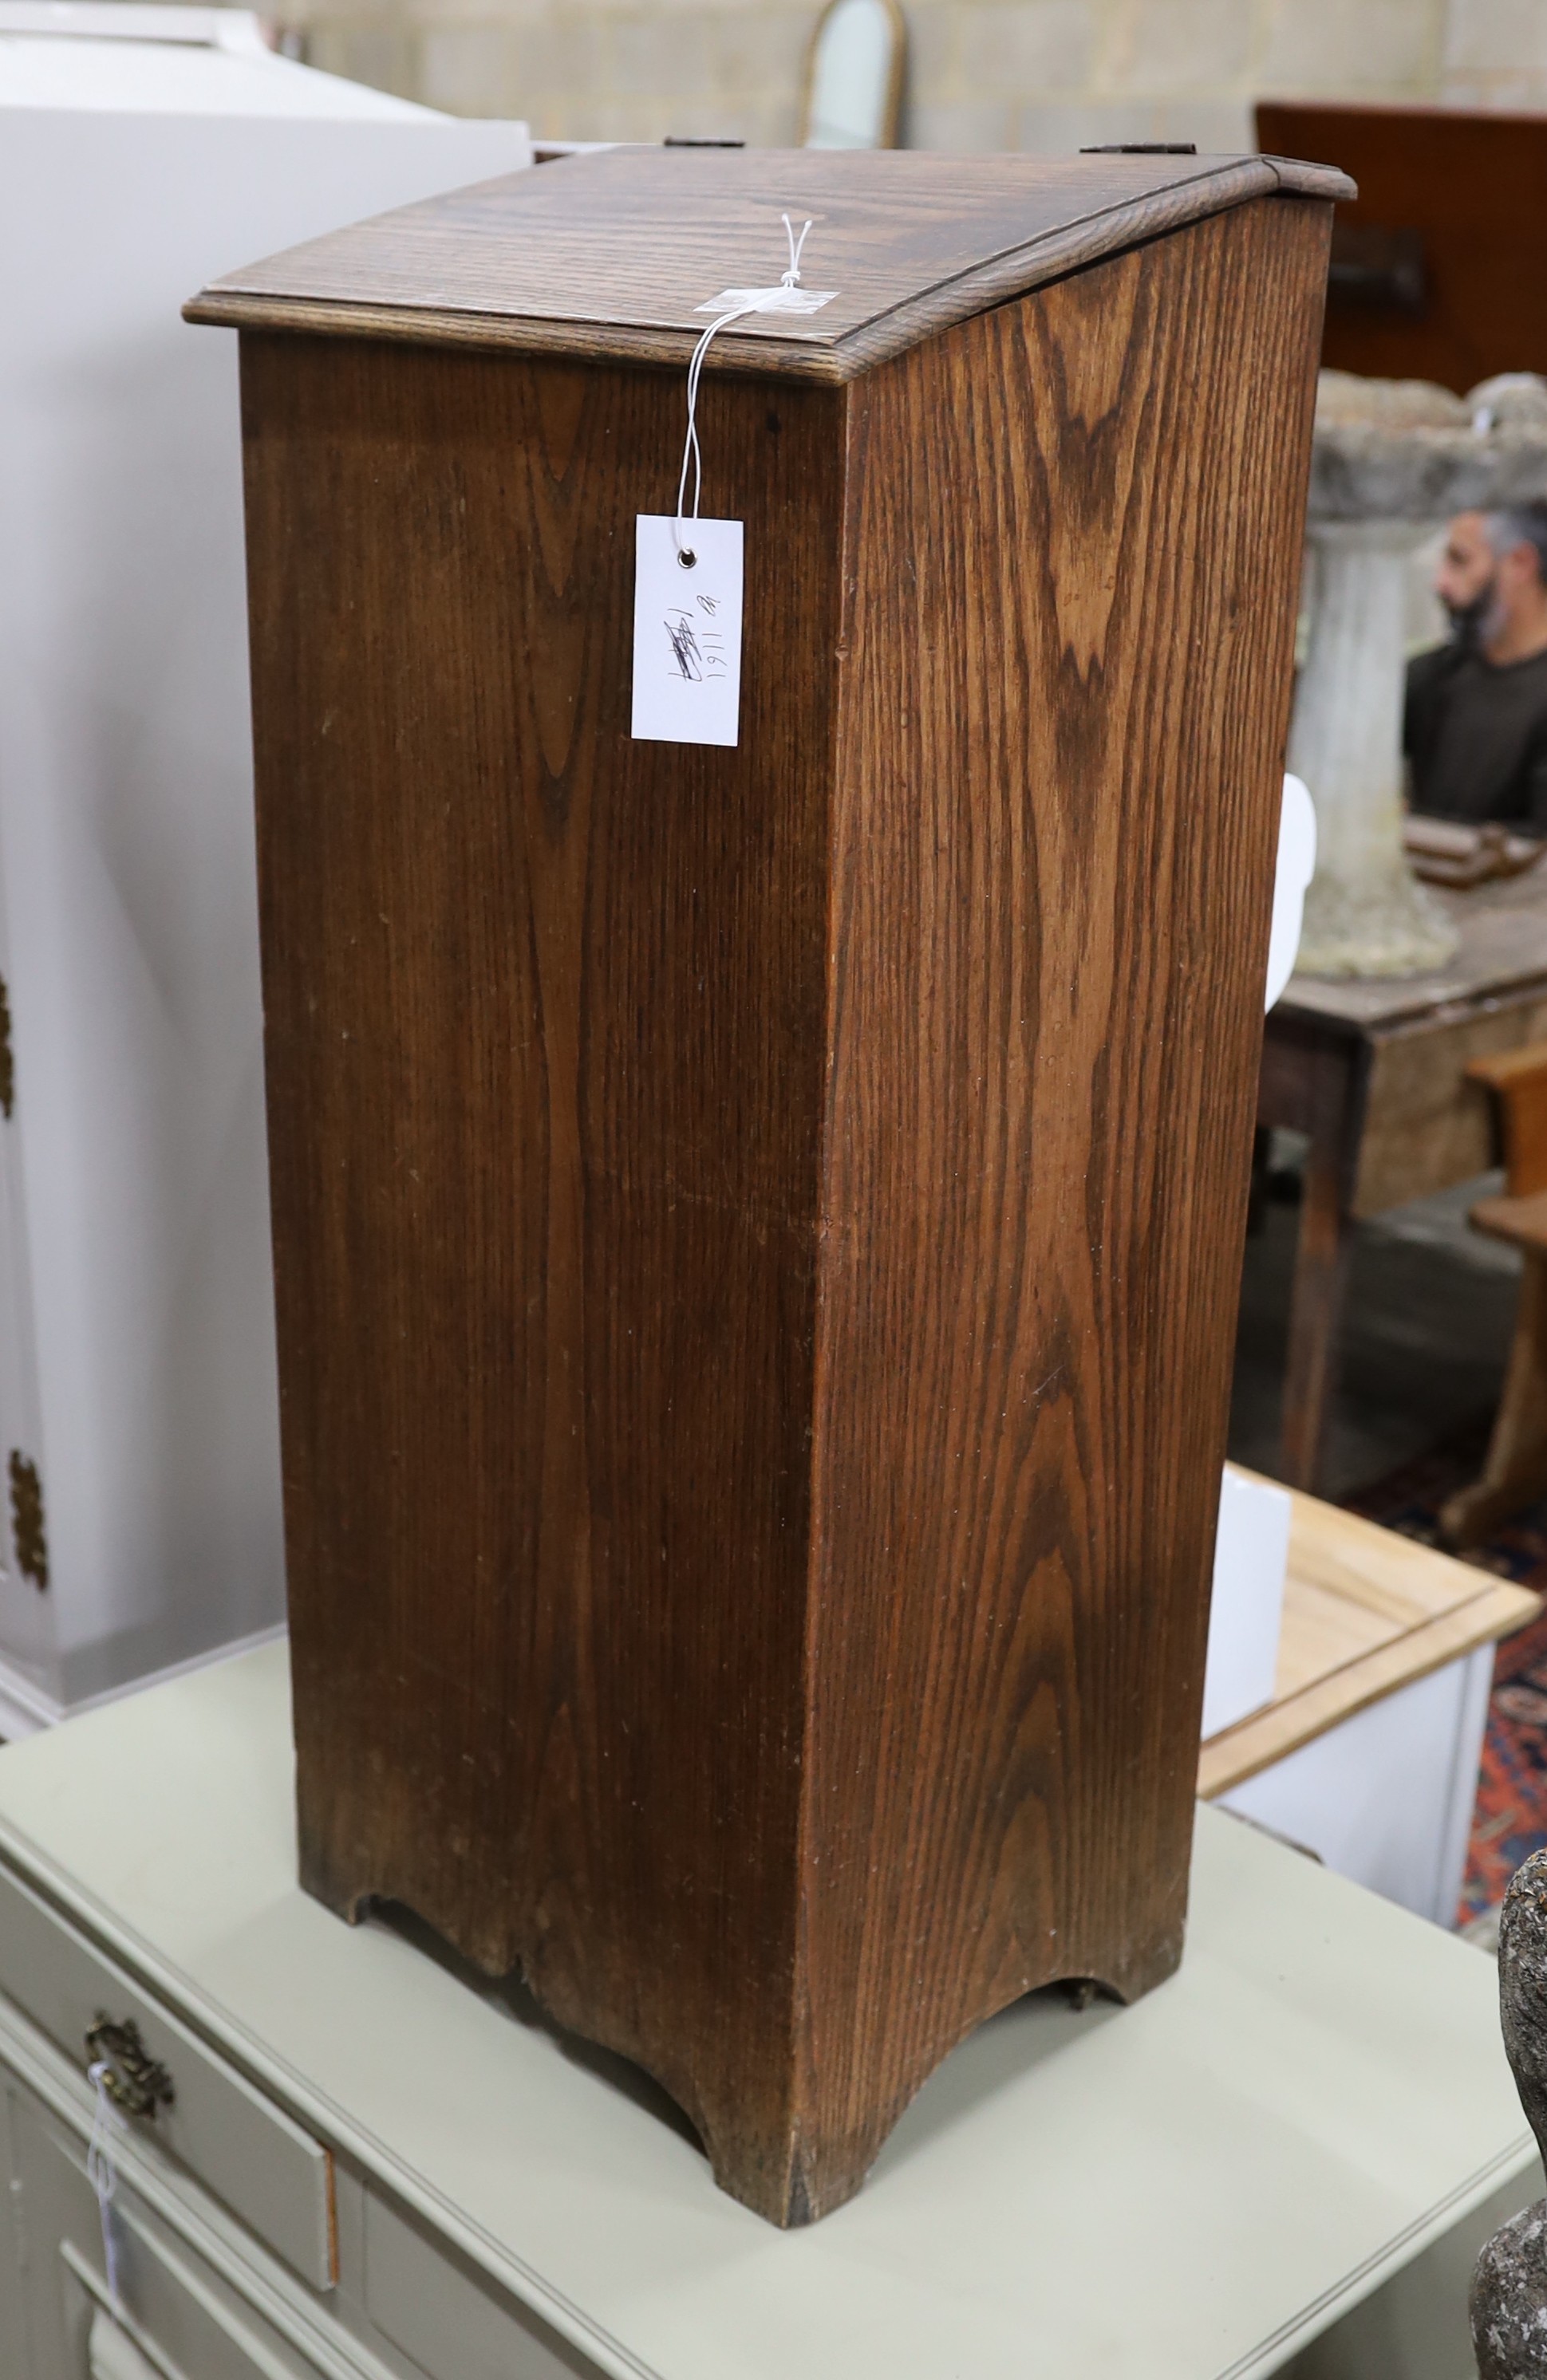 A French oak baguette box, width 34cm, depth 26cm, height 76cm